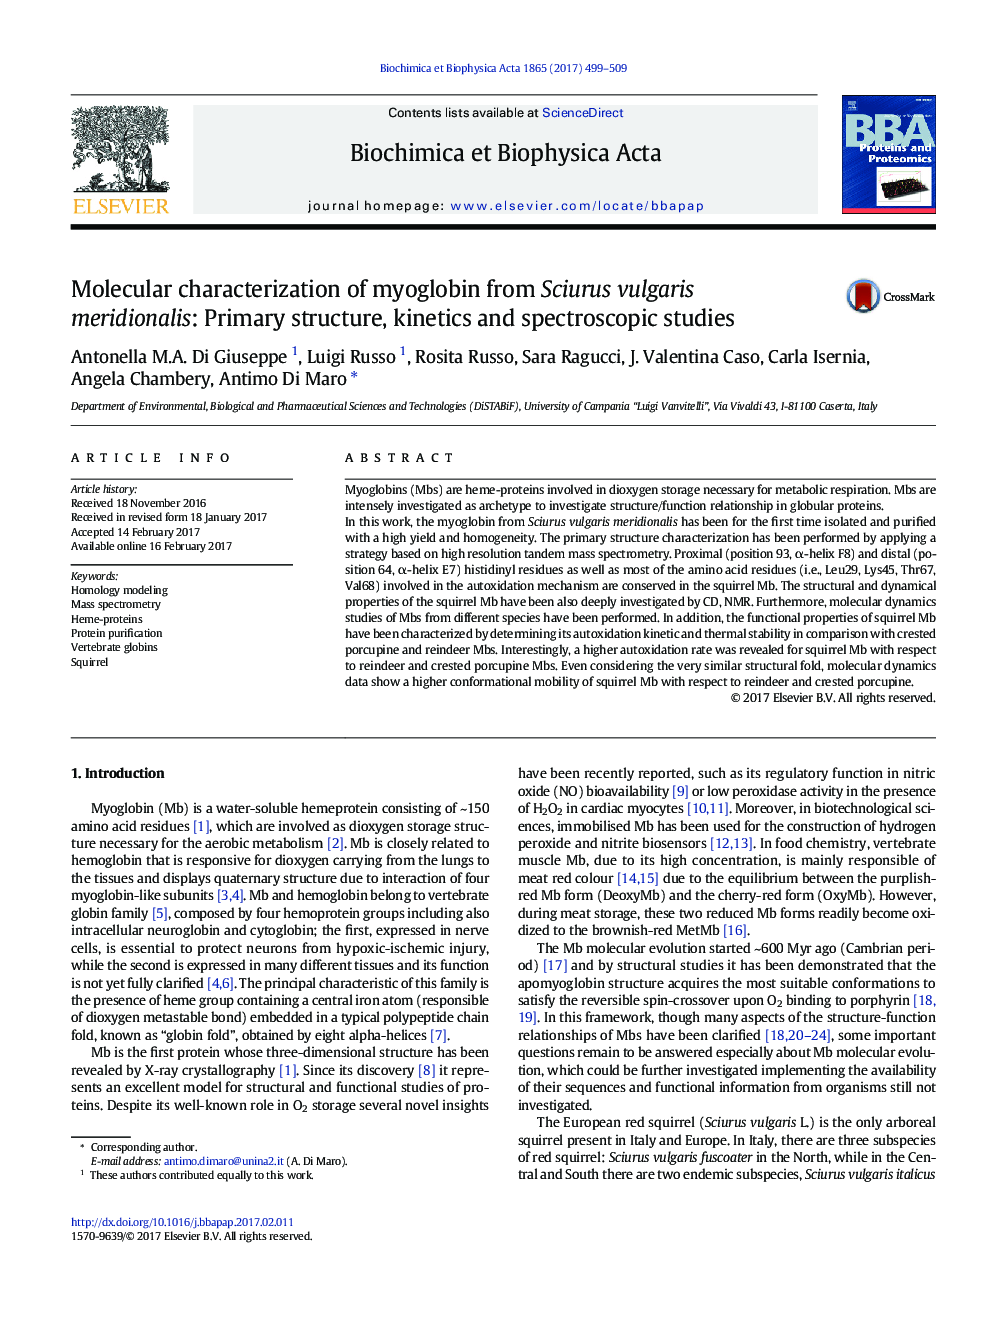 Molecular characterization of myoglobin from Sciurus vulgaris meridionalis: Primary structure, kinetics and spectroscopic studies